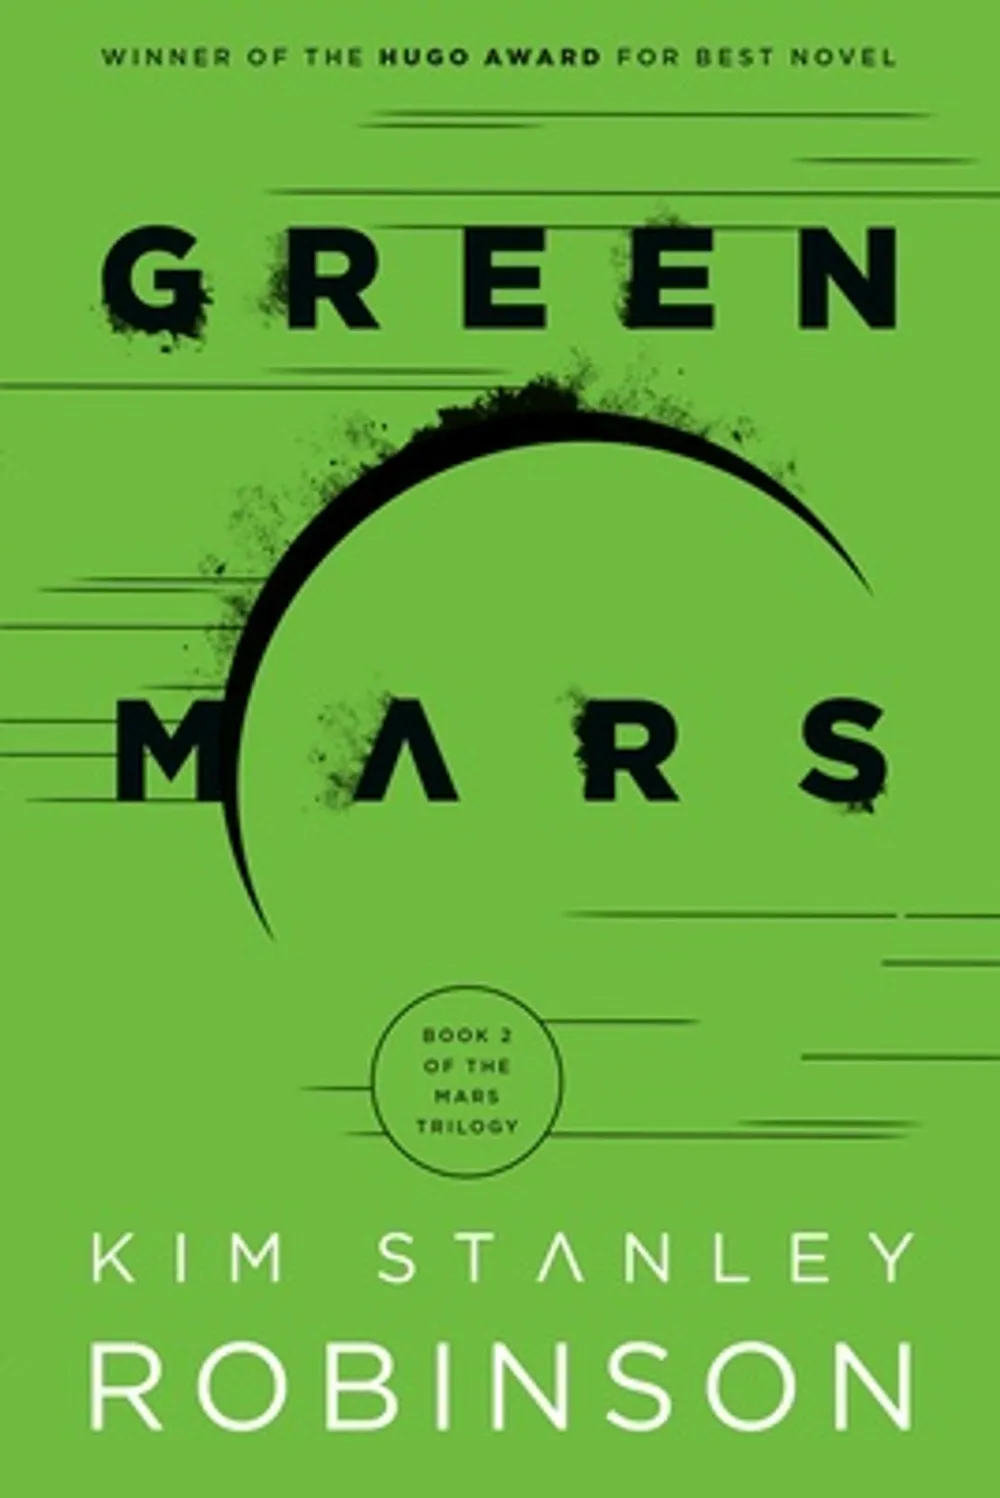 Green Mars, by Kim Stanley Robinson